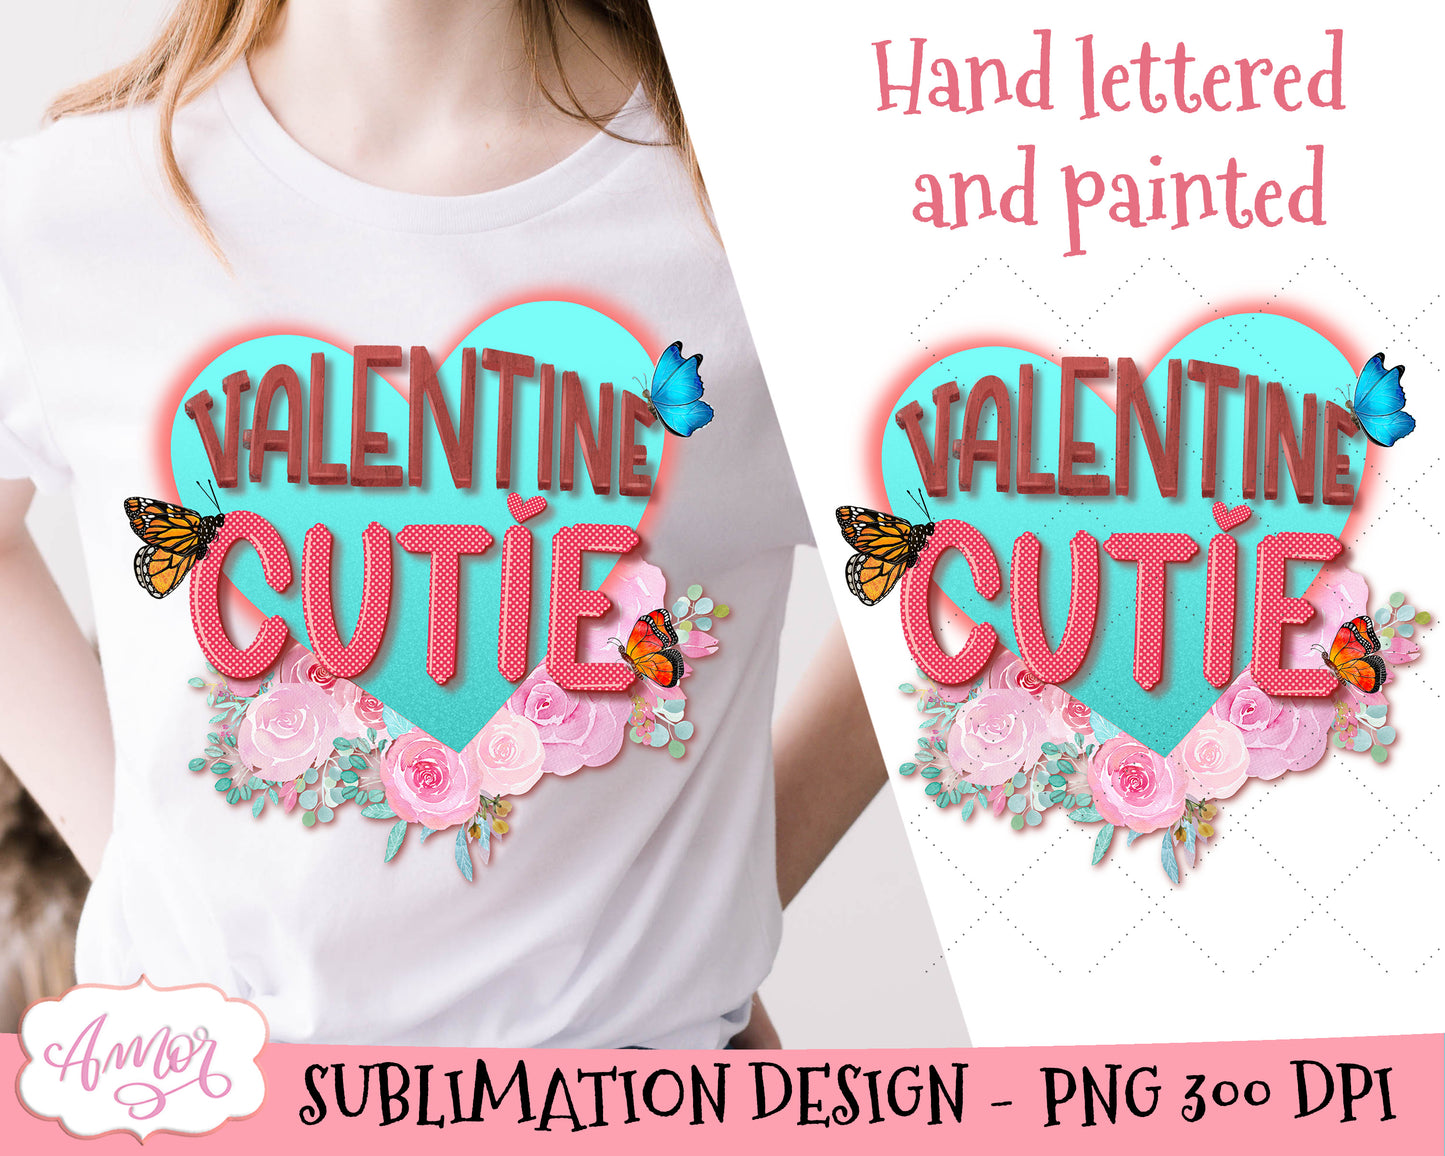 Valentine Cutie PNG digital graphic for sublimation